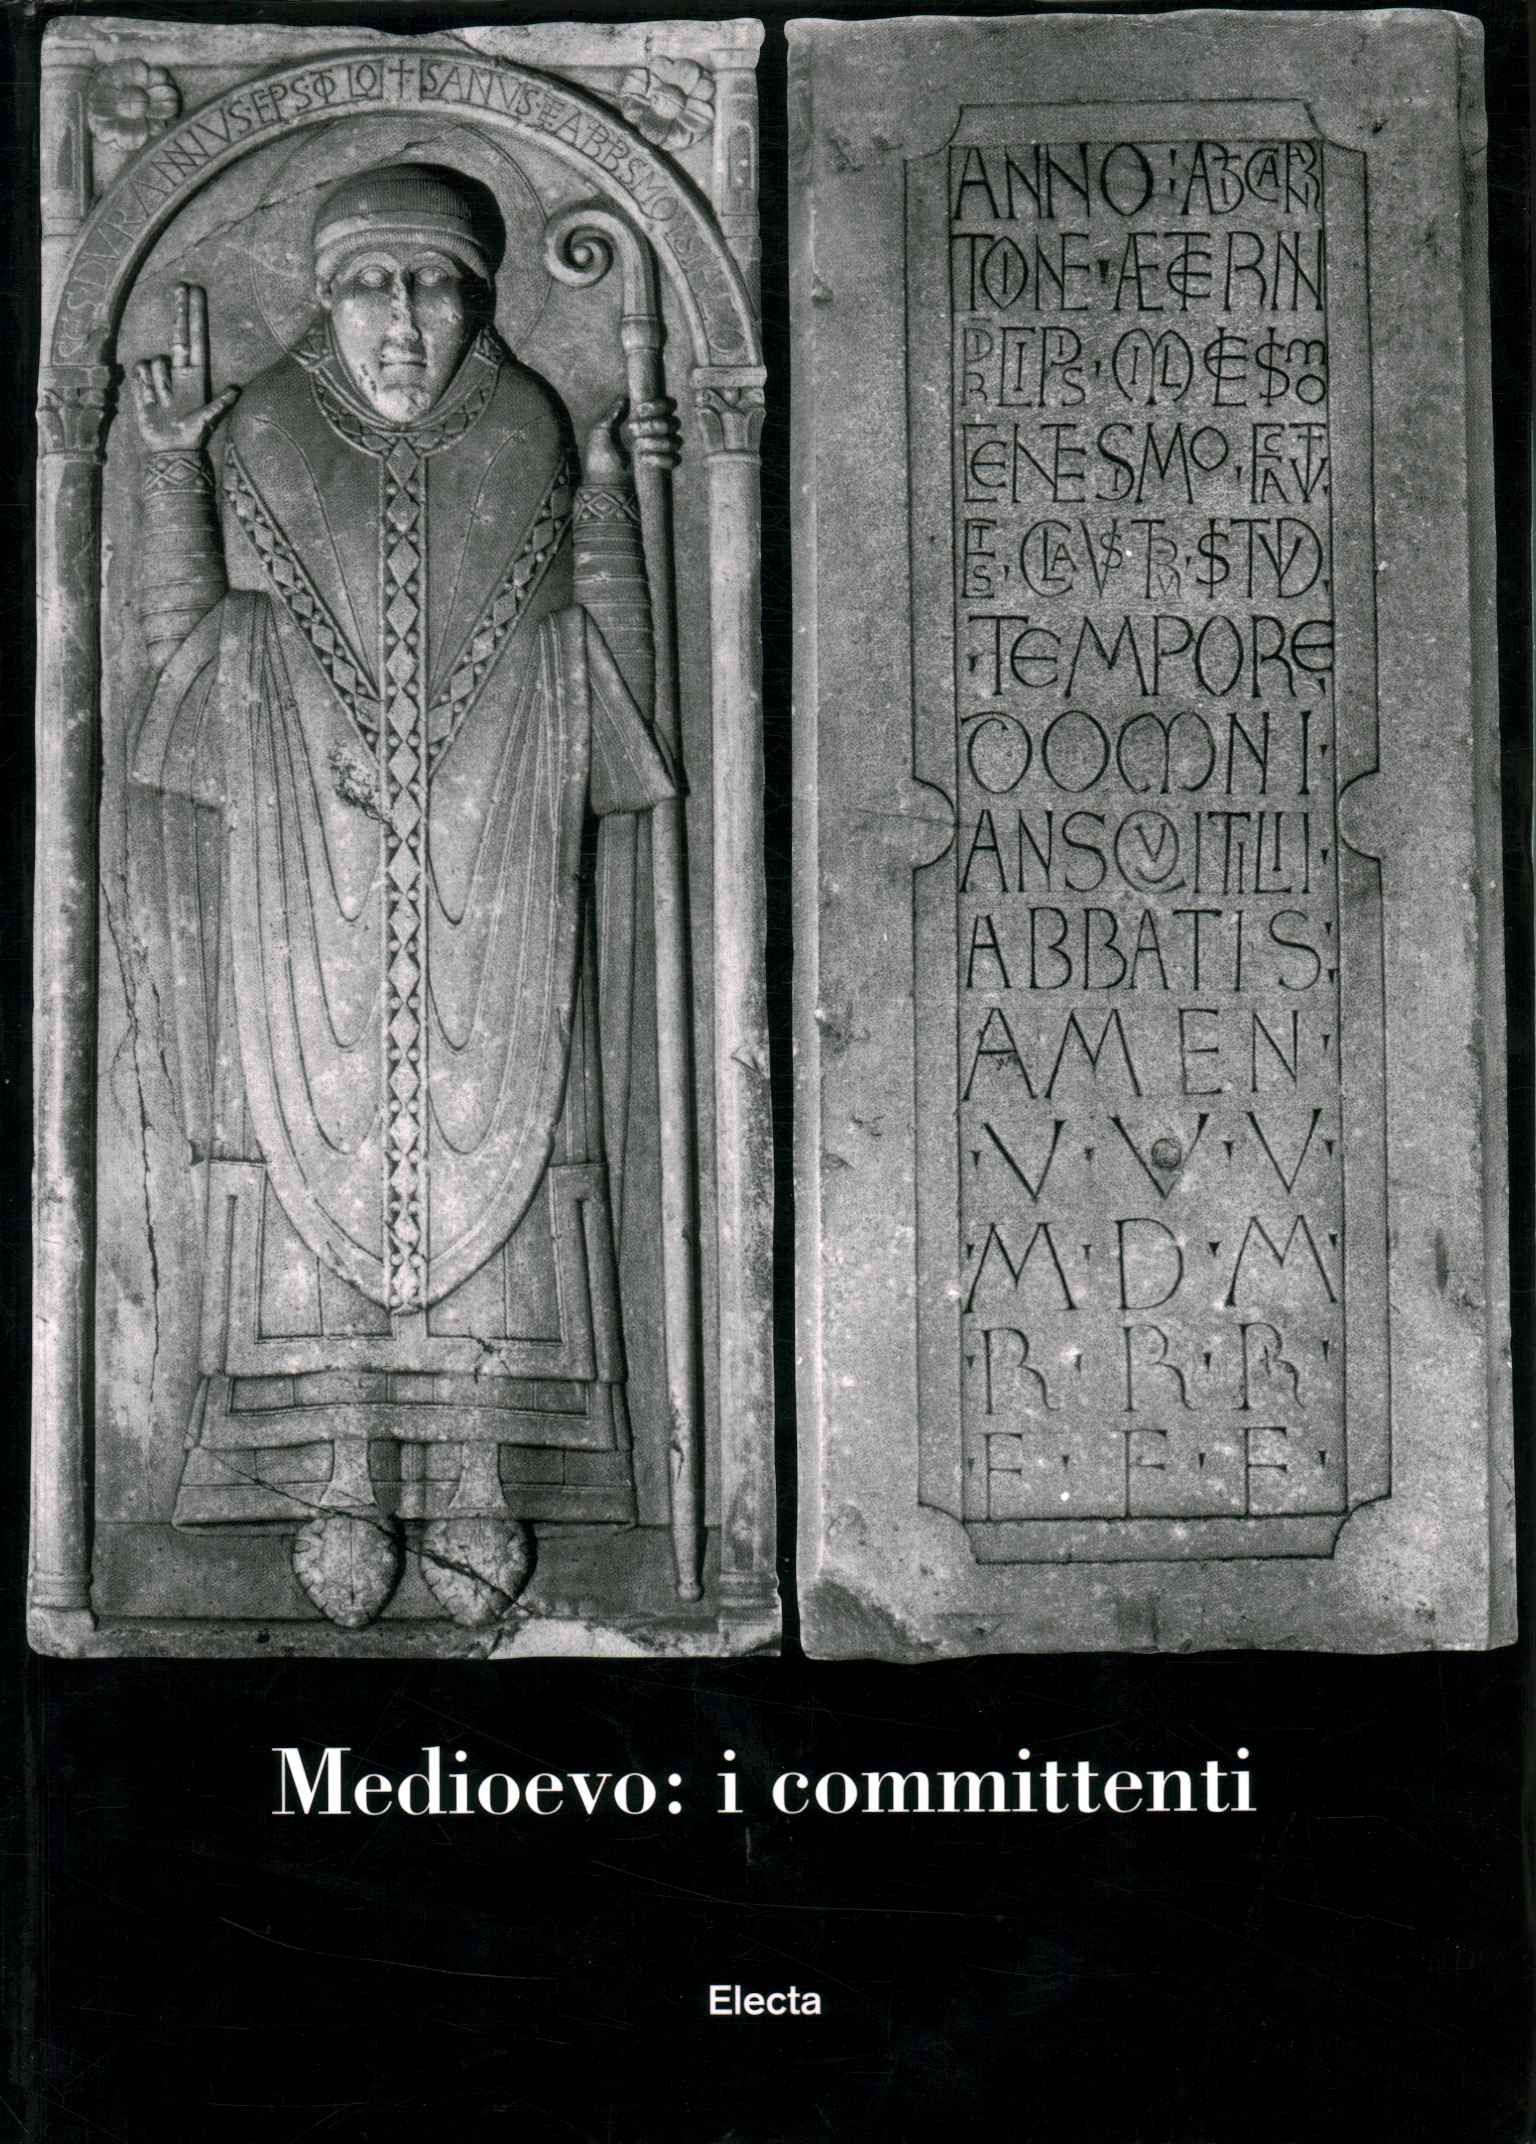 Medioevo: i committenti